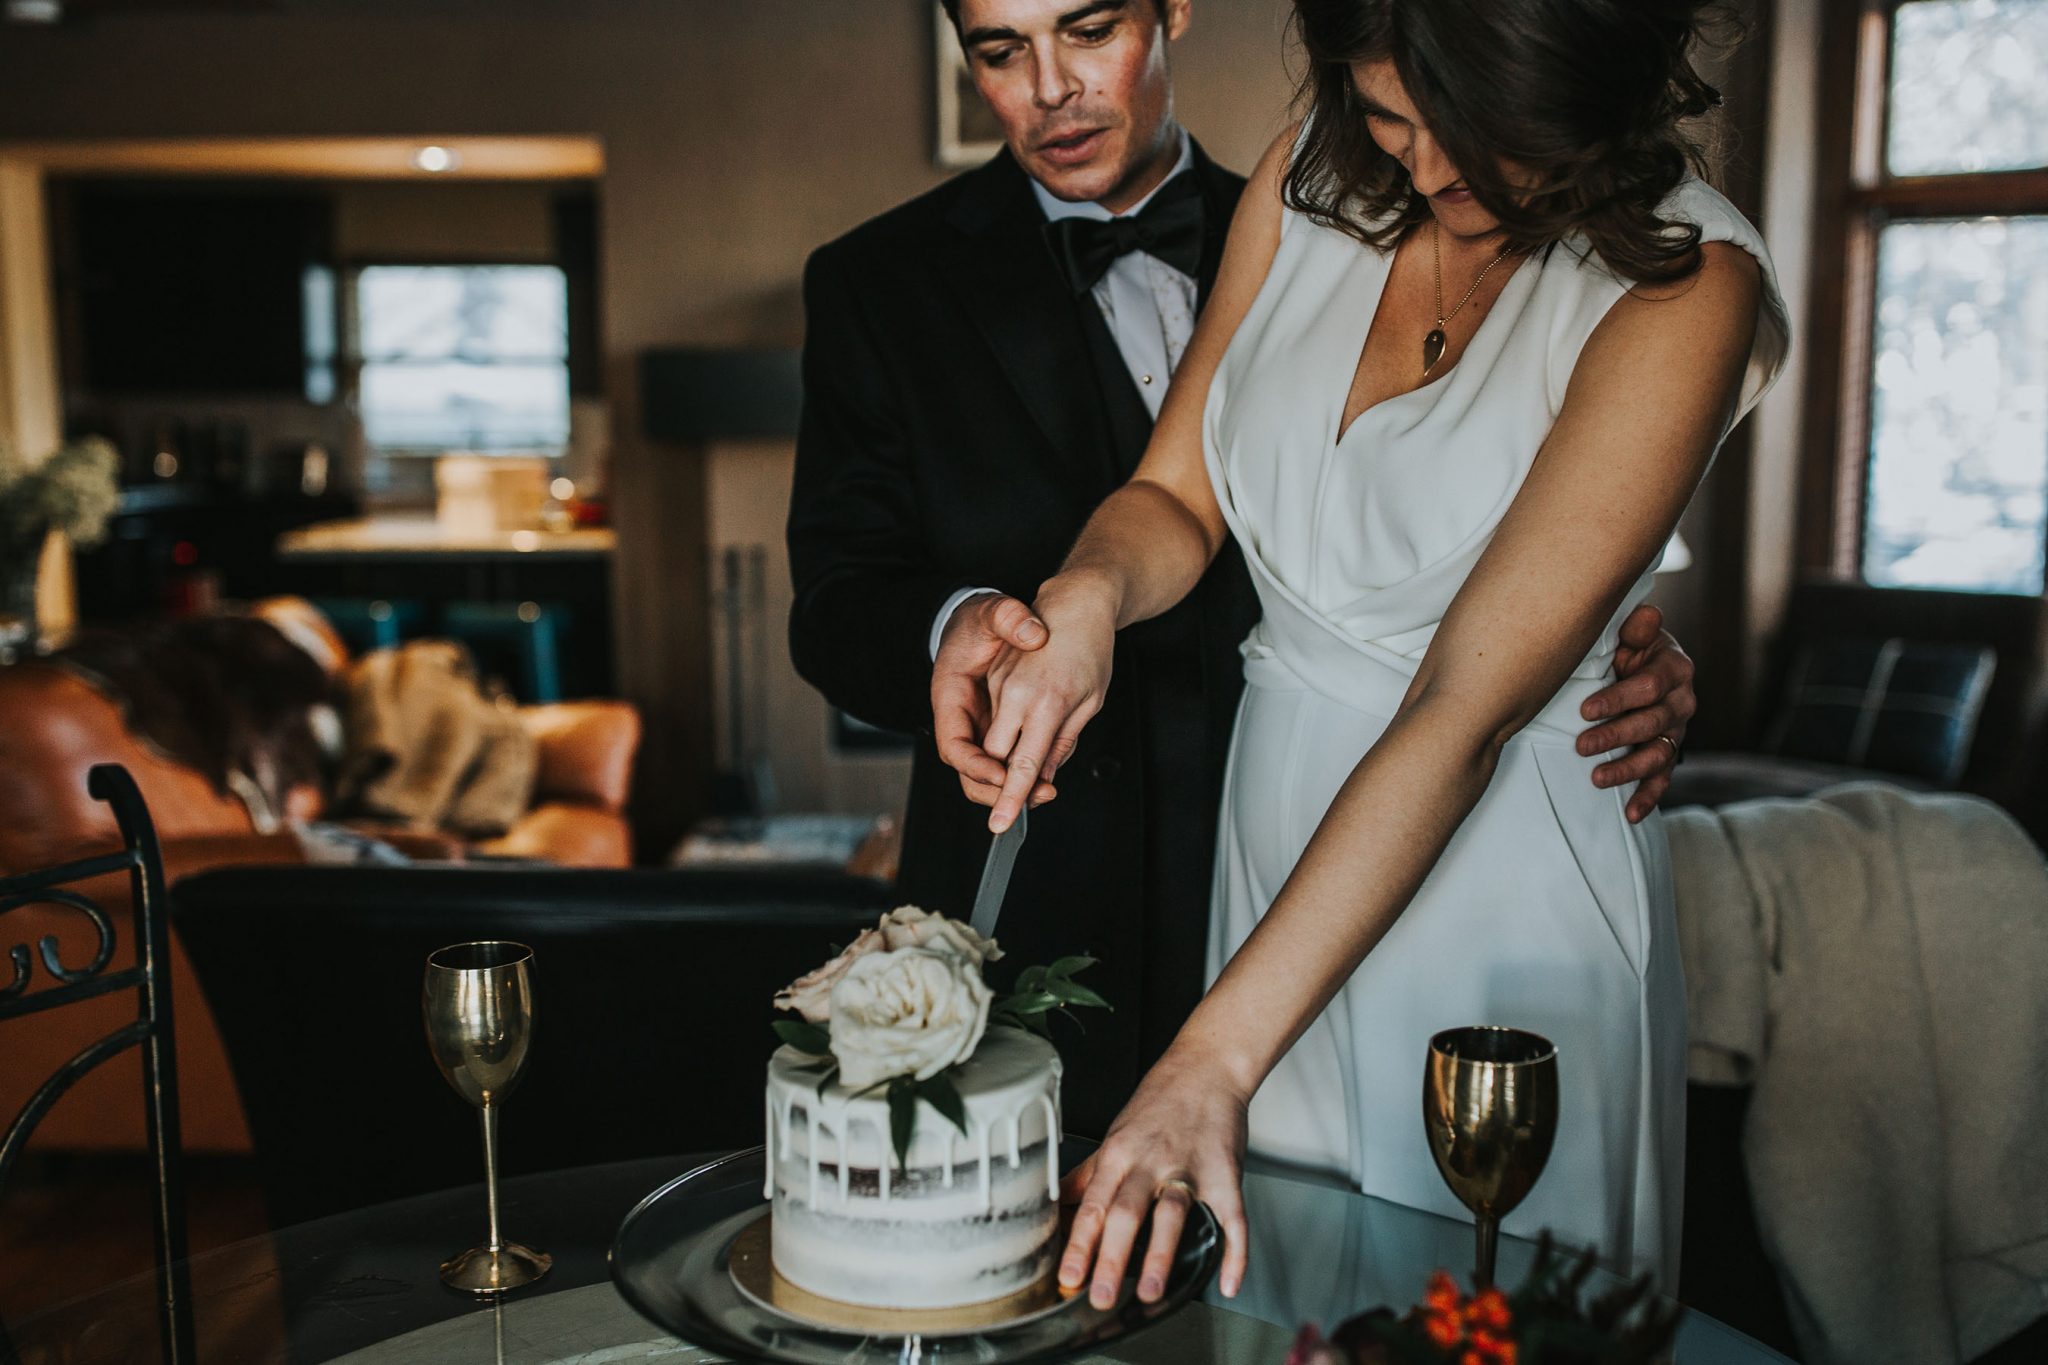 Simple Intimate Calgary Elopemen - wedding featured on Bronte Bride, Elopement Calgary, City Elopement, Simple Wedding, Wedding Cake, Cake Cutting